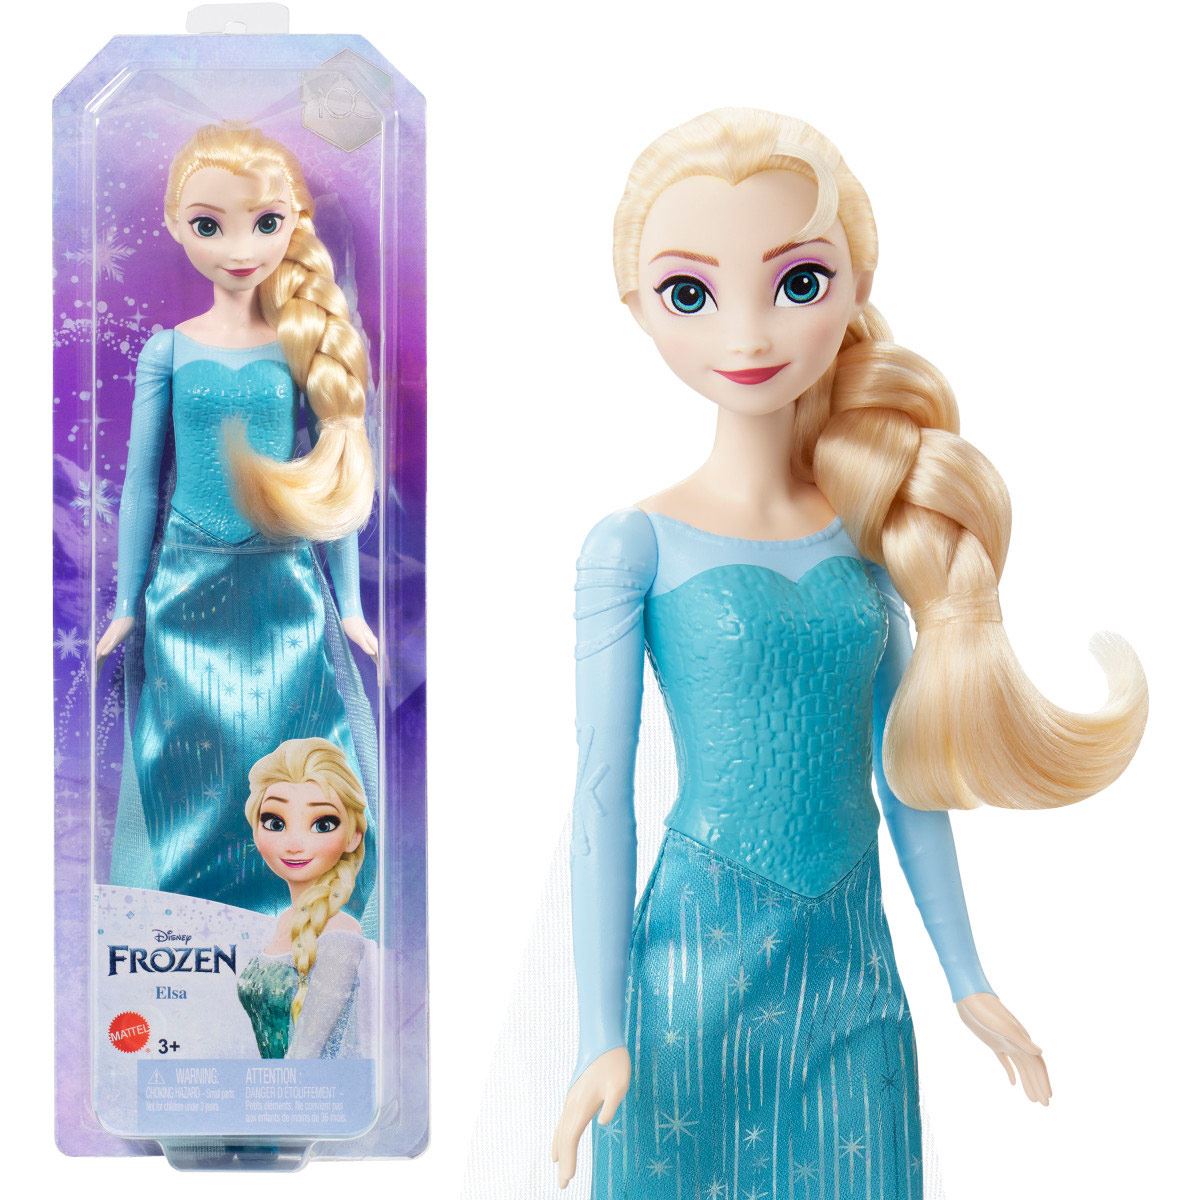 Disney Frozen 2 Elsa - Muñeca de viaje de 14 pulgadas de alto